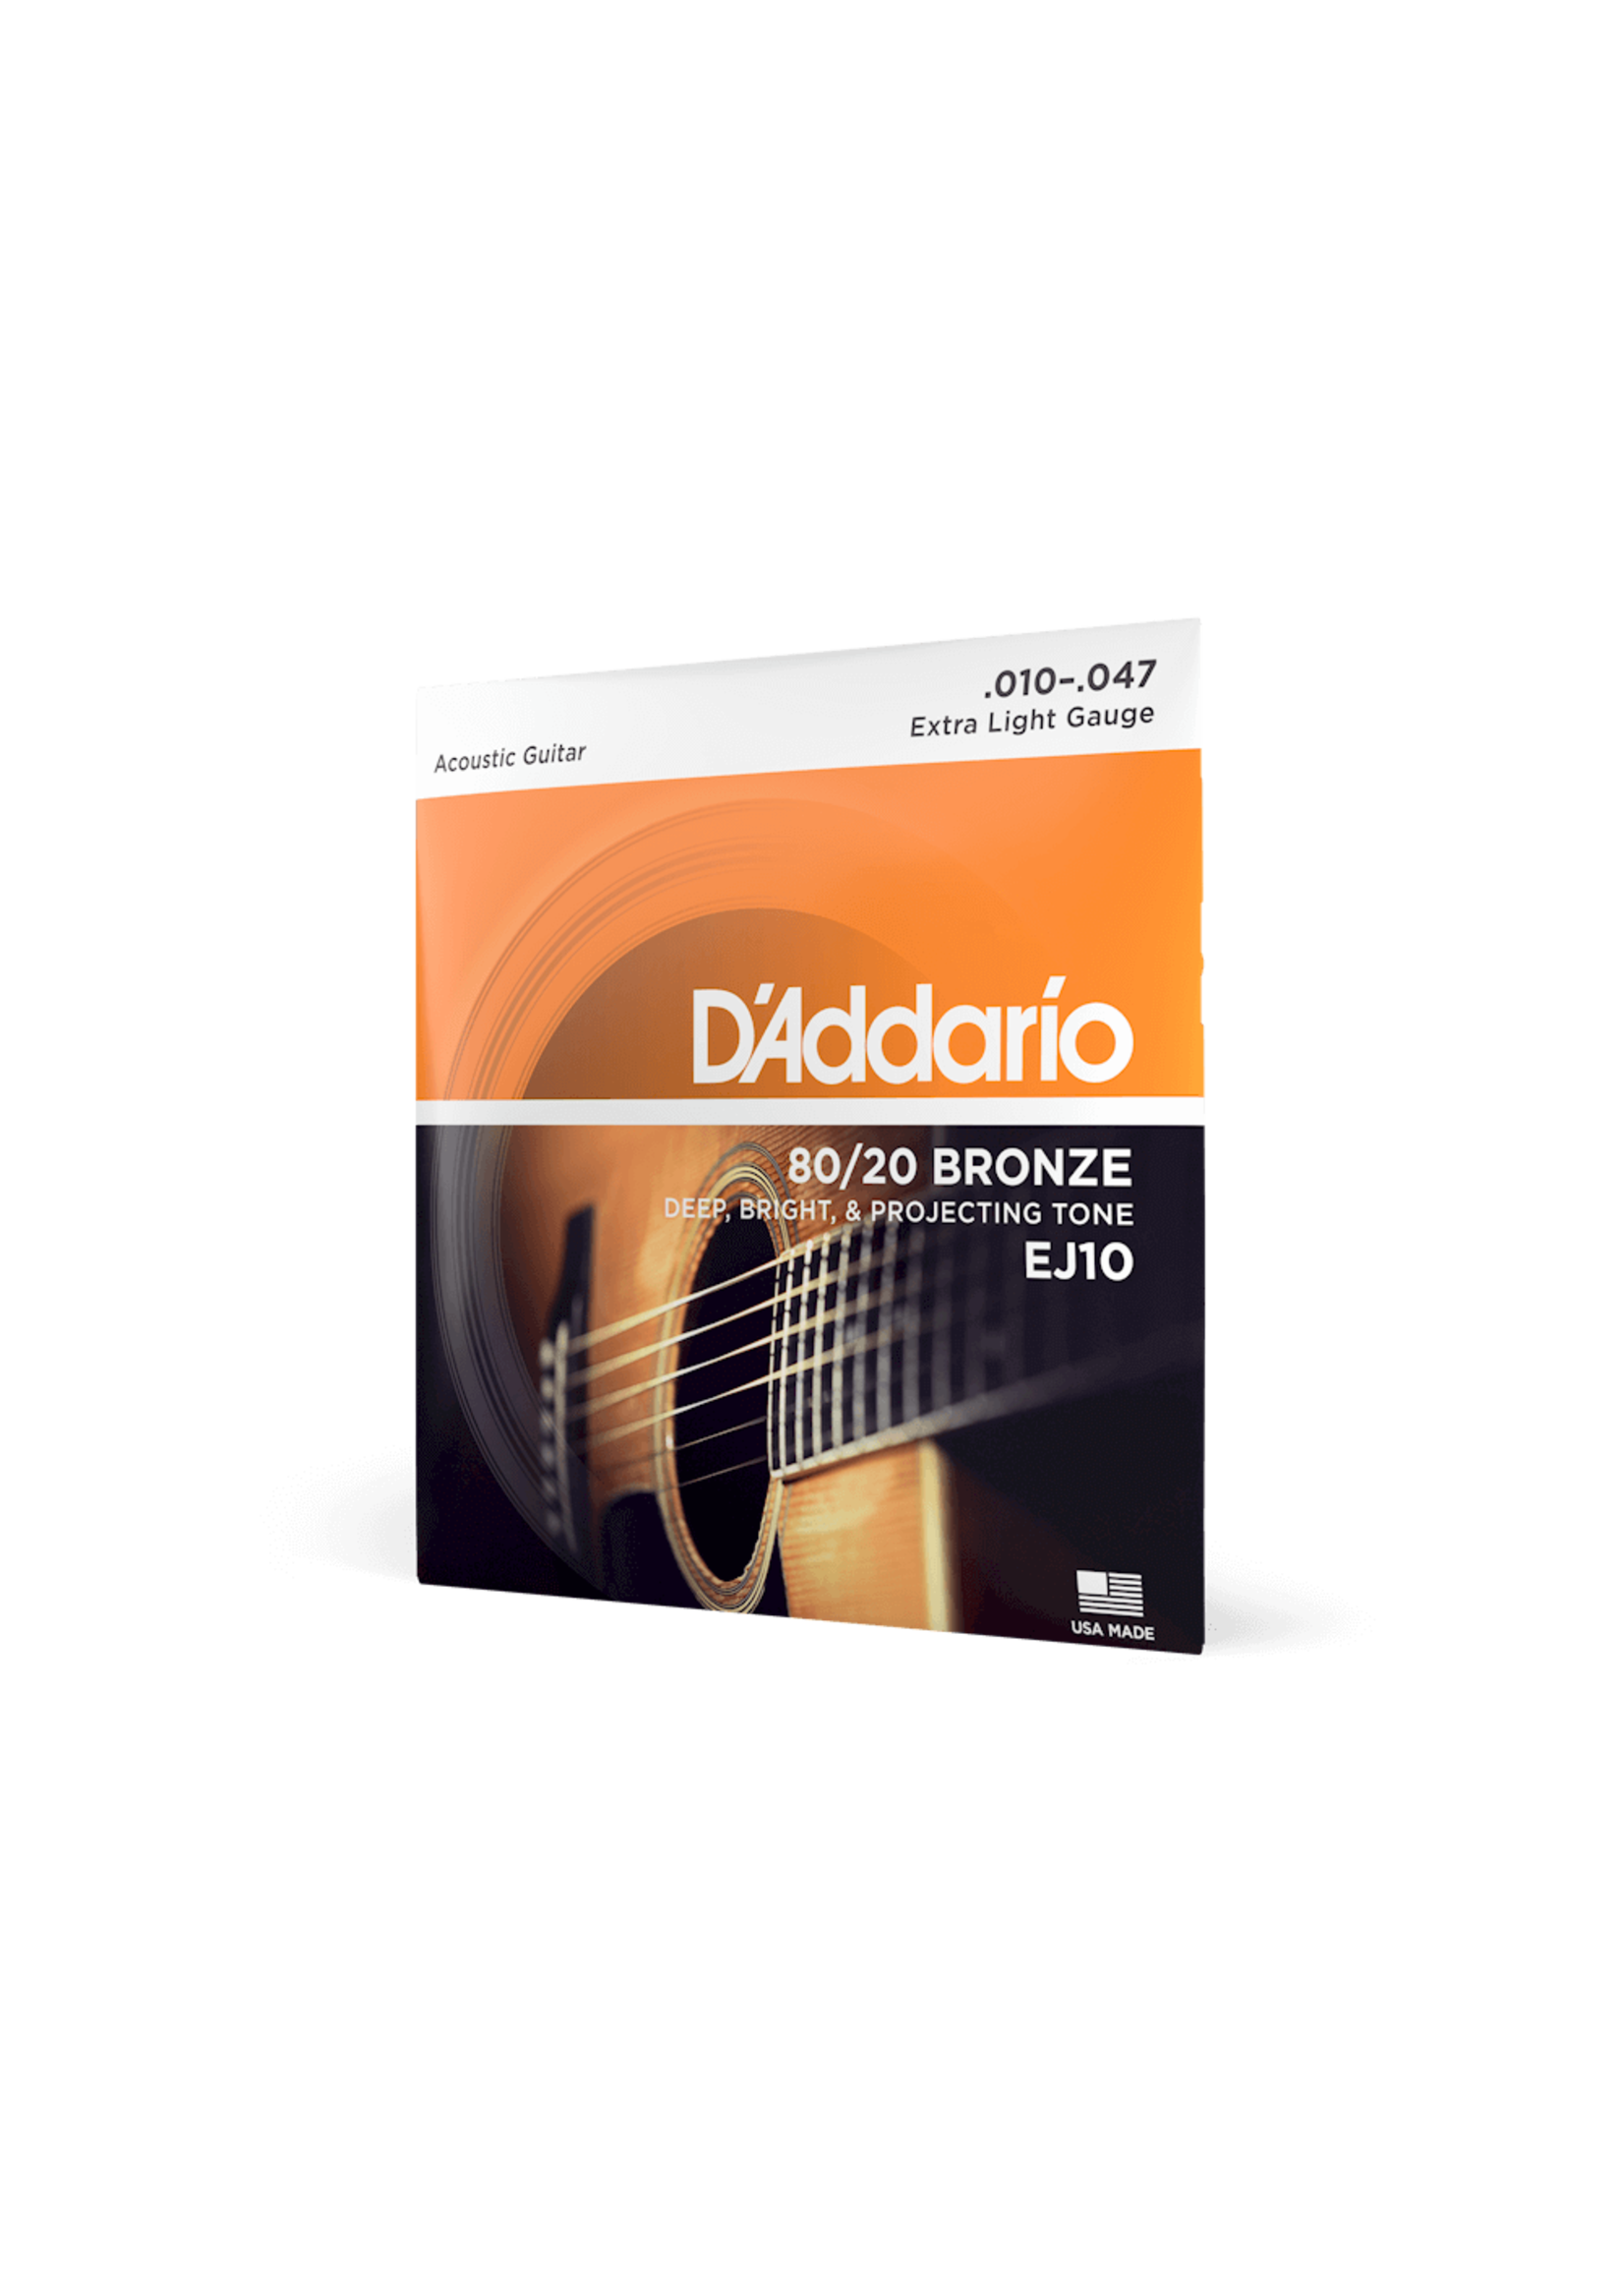 D'Addario D'Addario EJ10 Bronze Acoustic Guitar Strings, Extra Light, 10-47